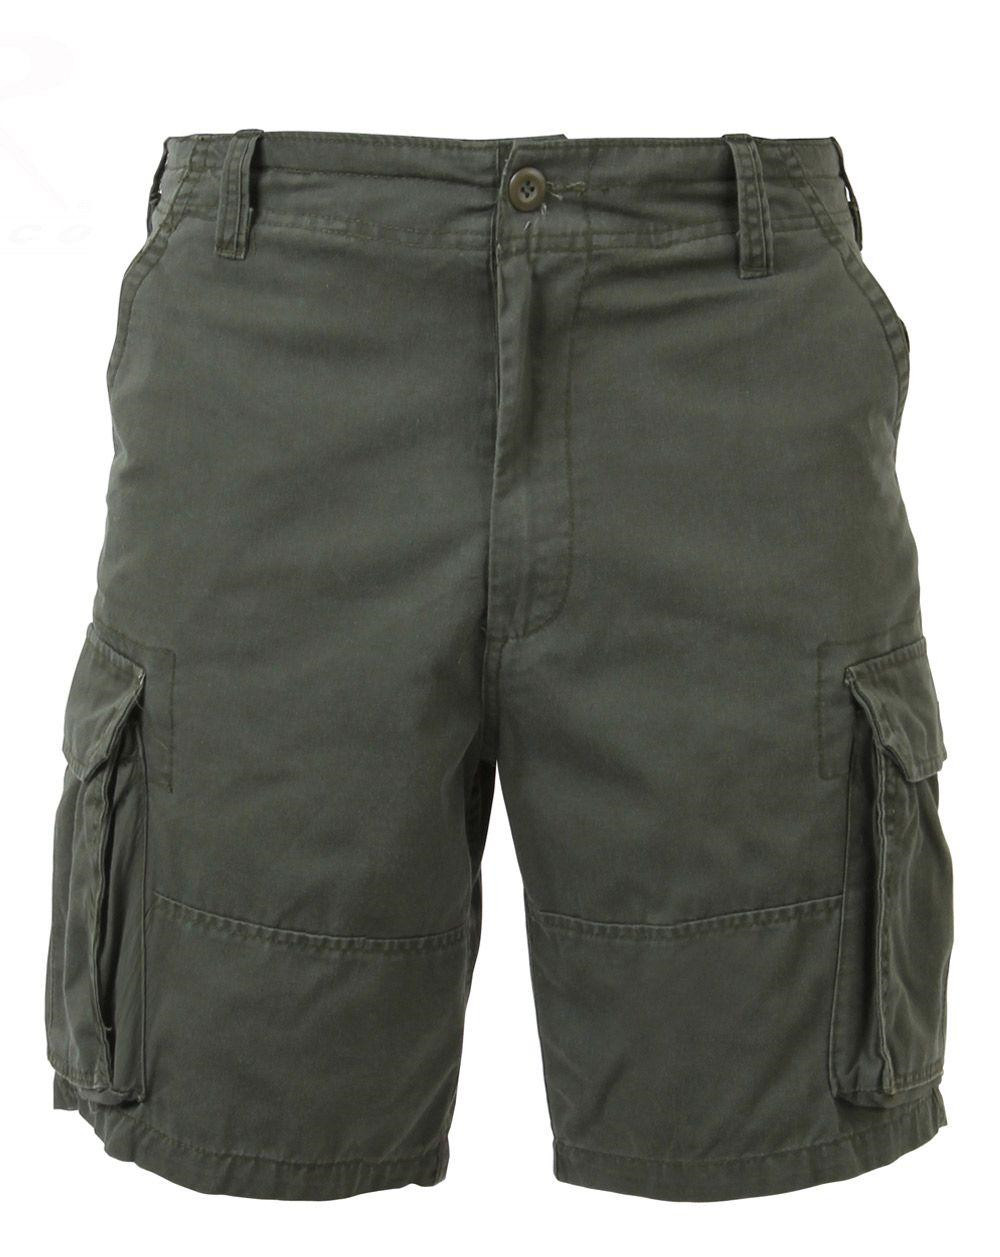 Rothco Cargo shorts (Oliven, M)